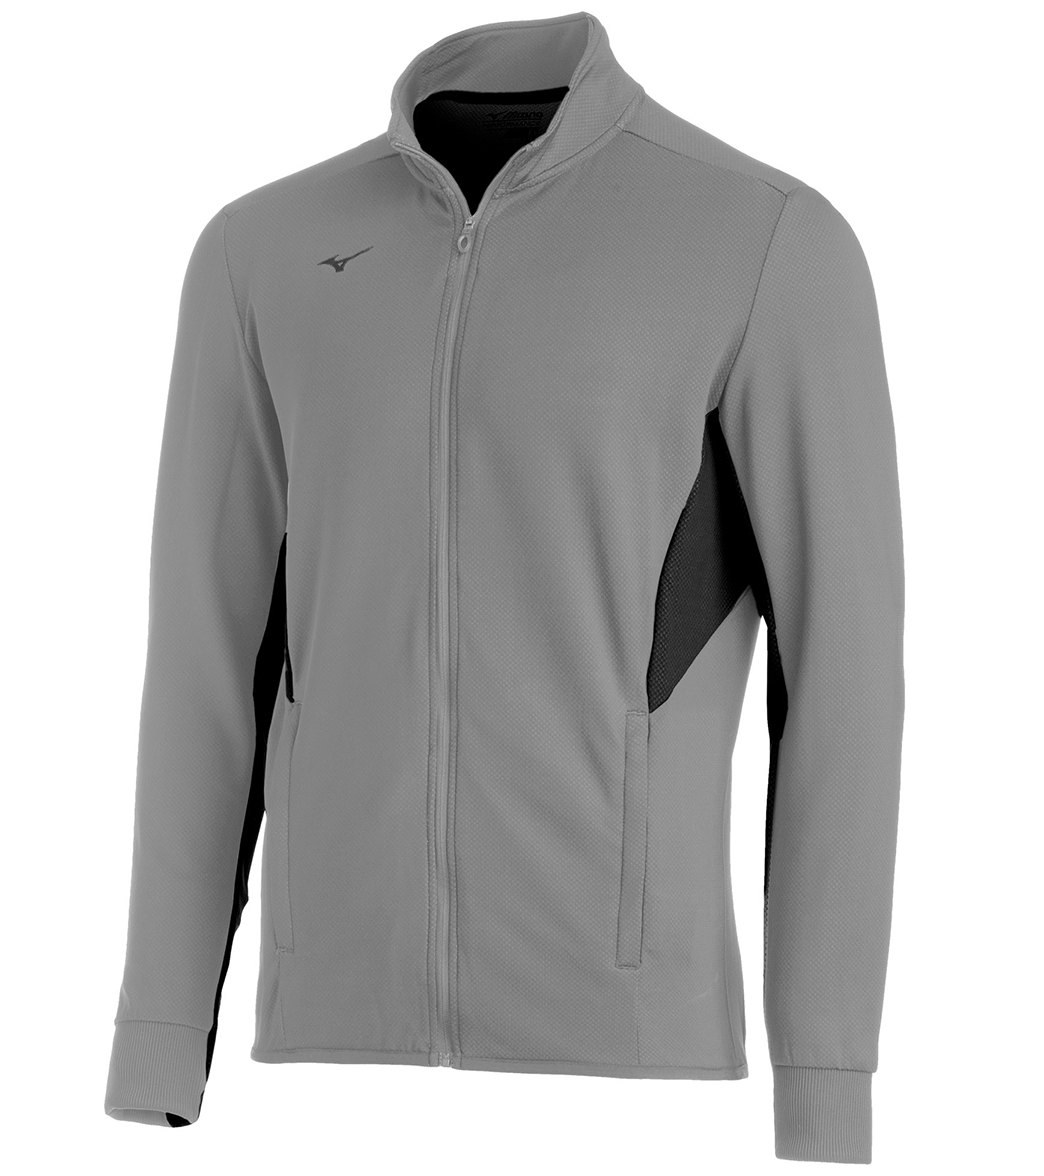 Mizuno Men's Elite Training Jacket - Grey-Black Medium Grey/Black Cotton/Polyester - Swimoutlet.com